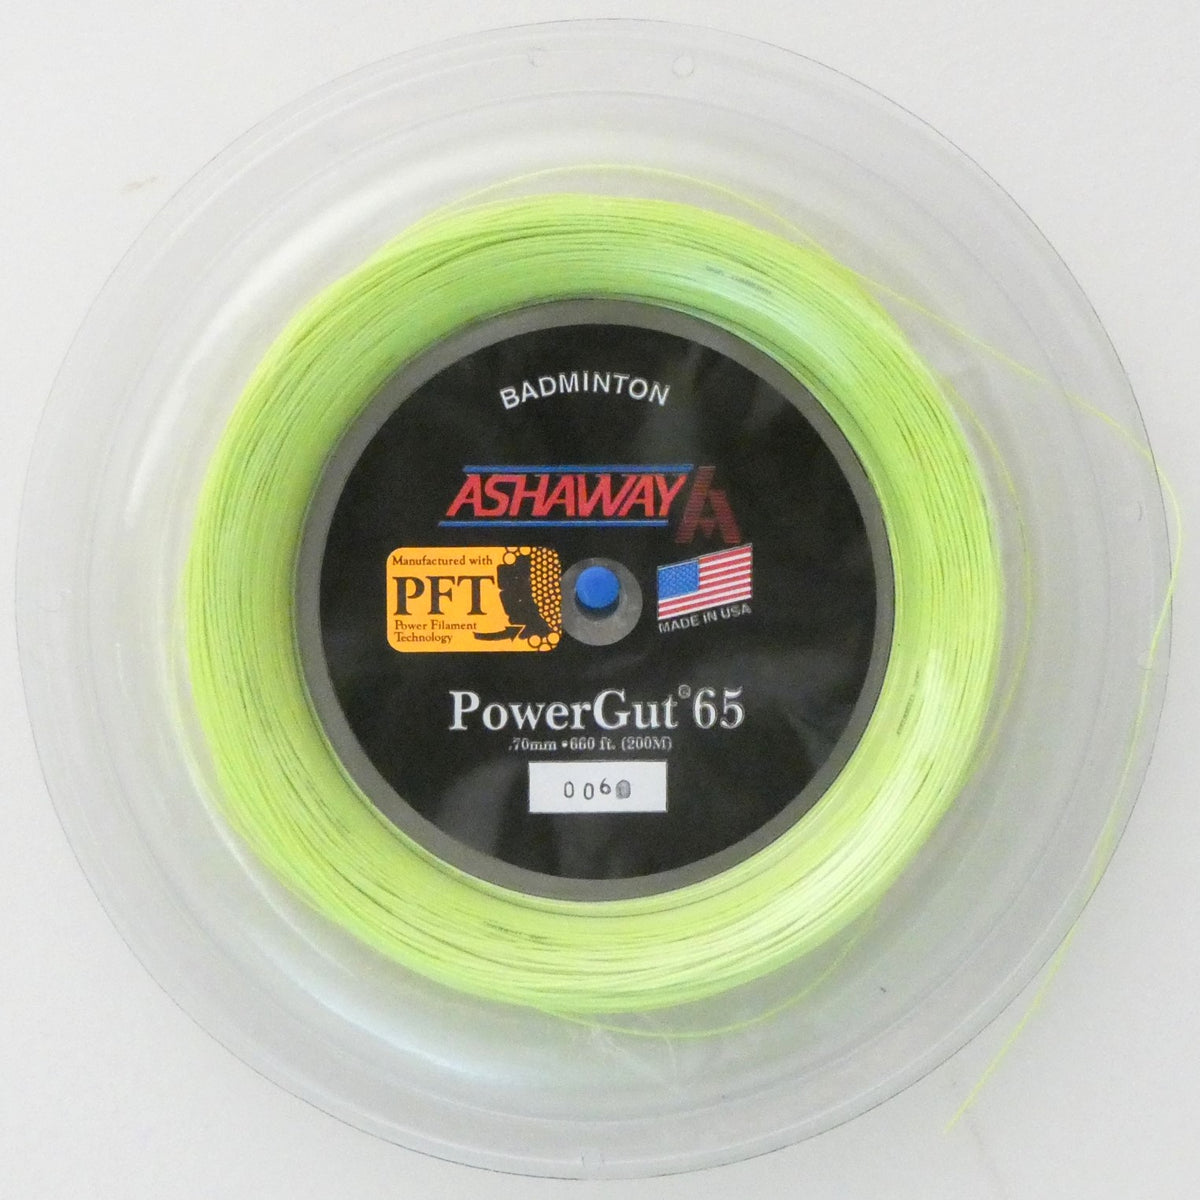 Ashaway PowerGut65 Badminton String, Neon Yellow, 200 M REEL